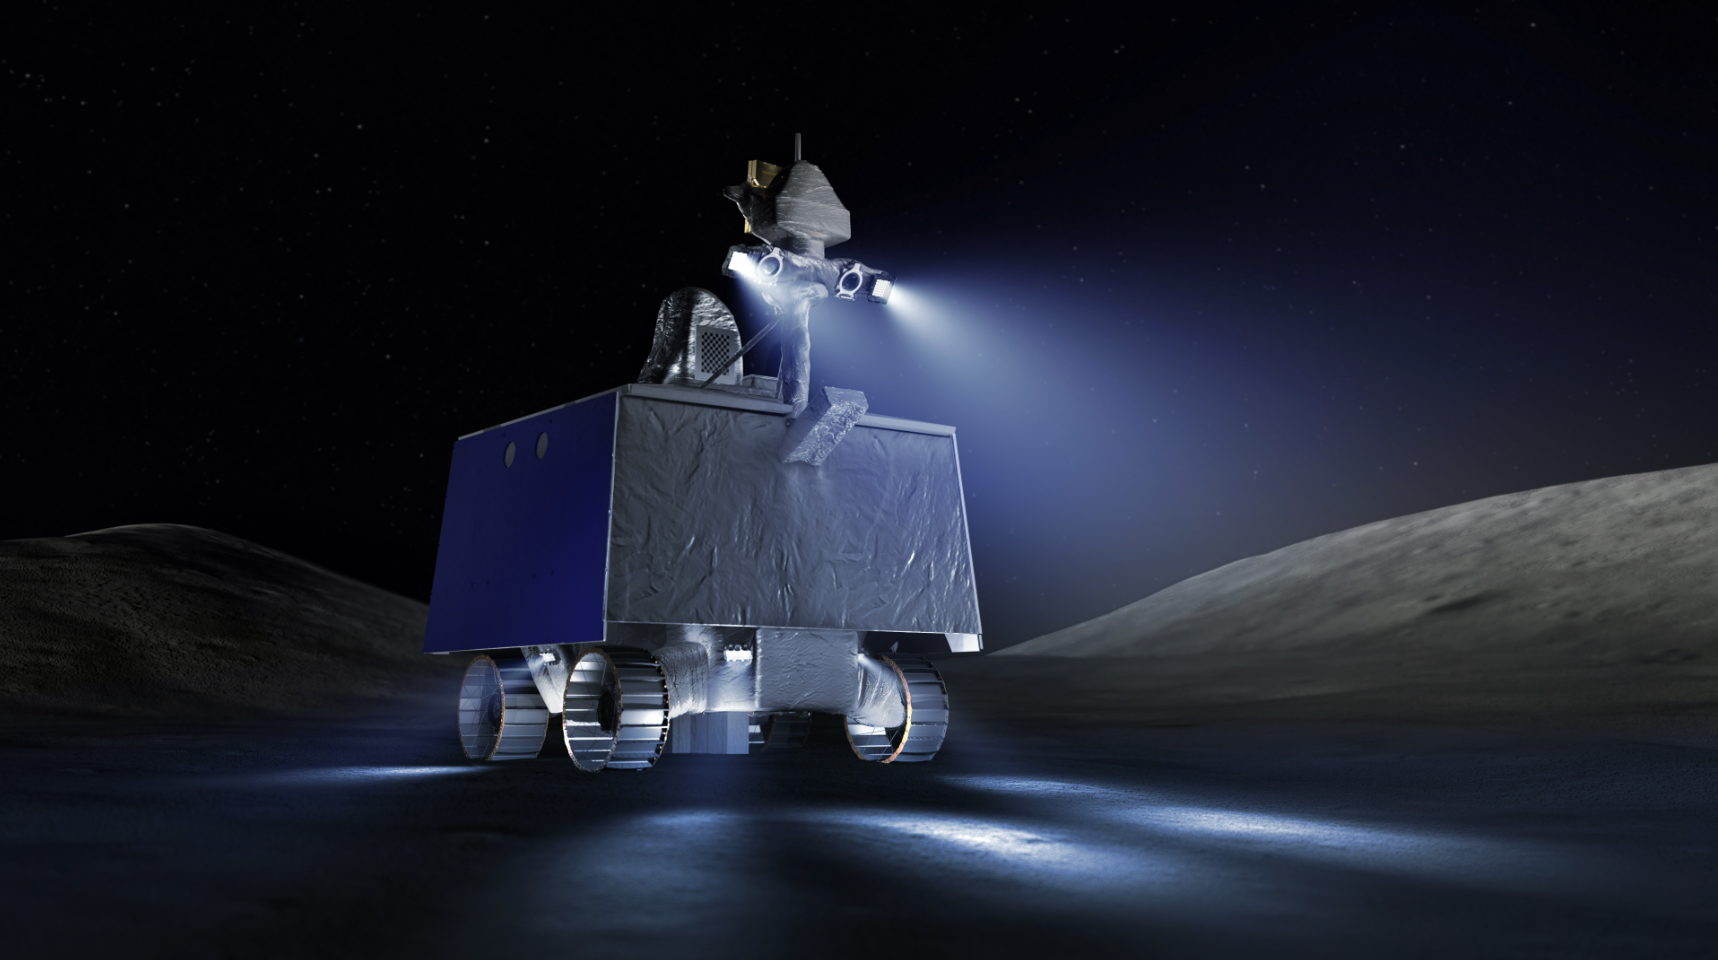 Illustration of NASA's Volatiles Investigating Polar Exploration Rover, or VIPER, on the surface of the Moon. Credits: NASA Ames/Daniel Rutter